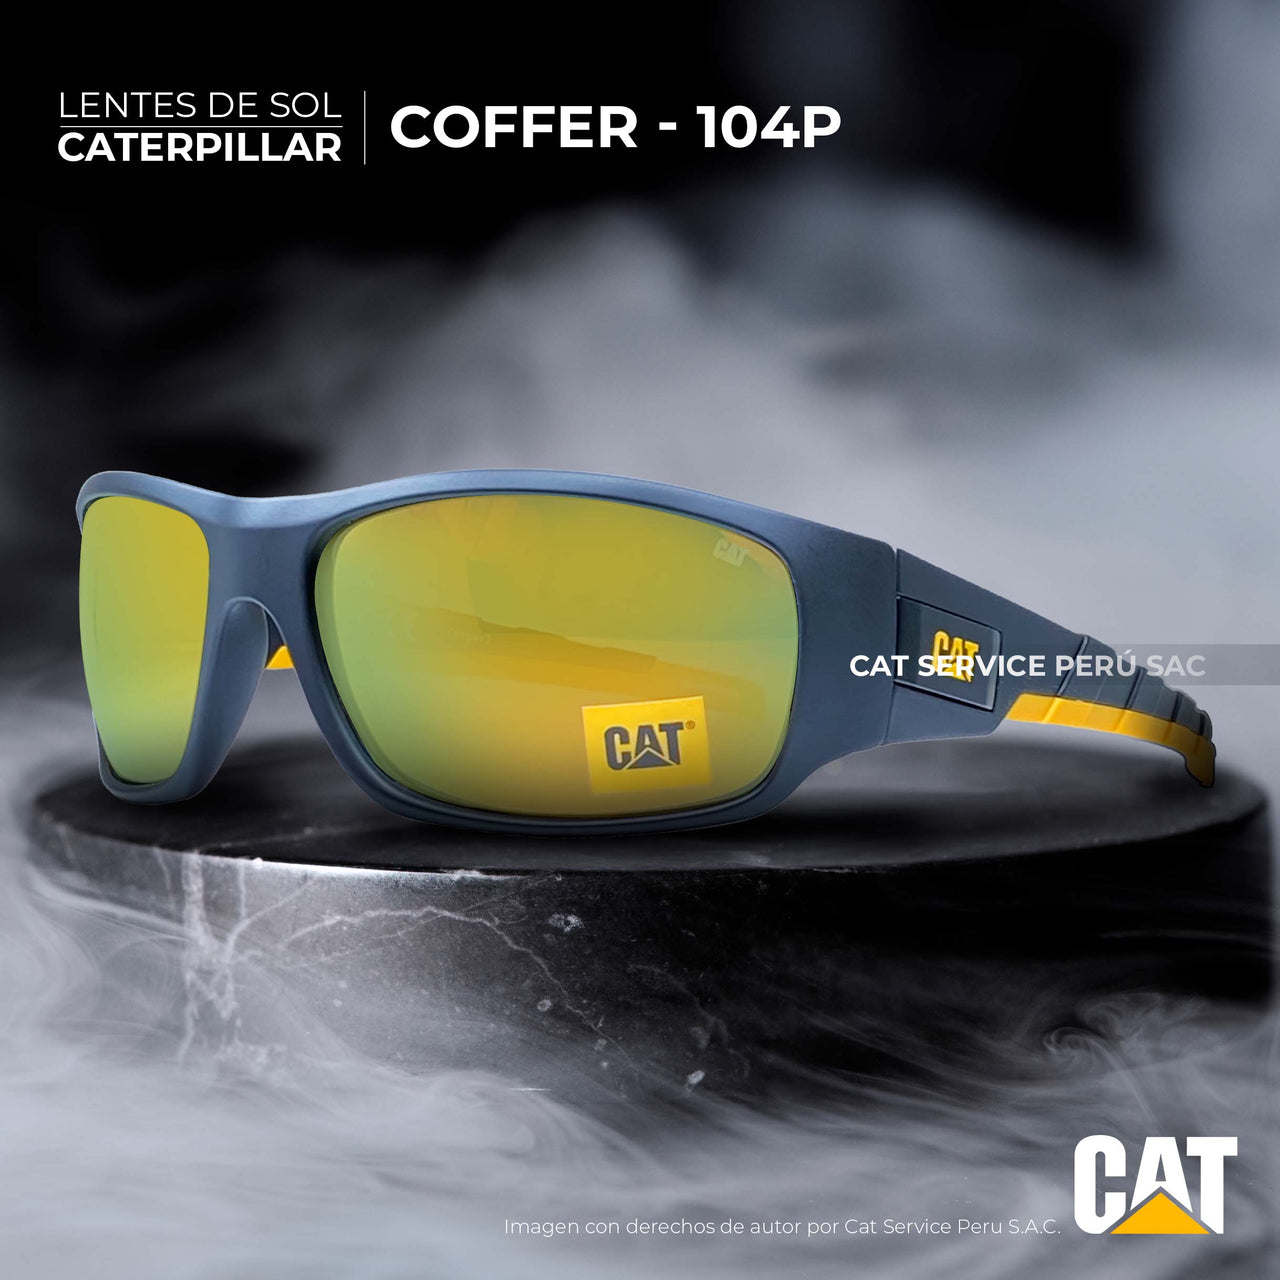 Cat CTS Coffer 104P Yellow Moons Polarized Sunglasses 